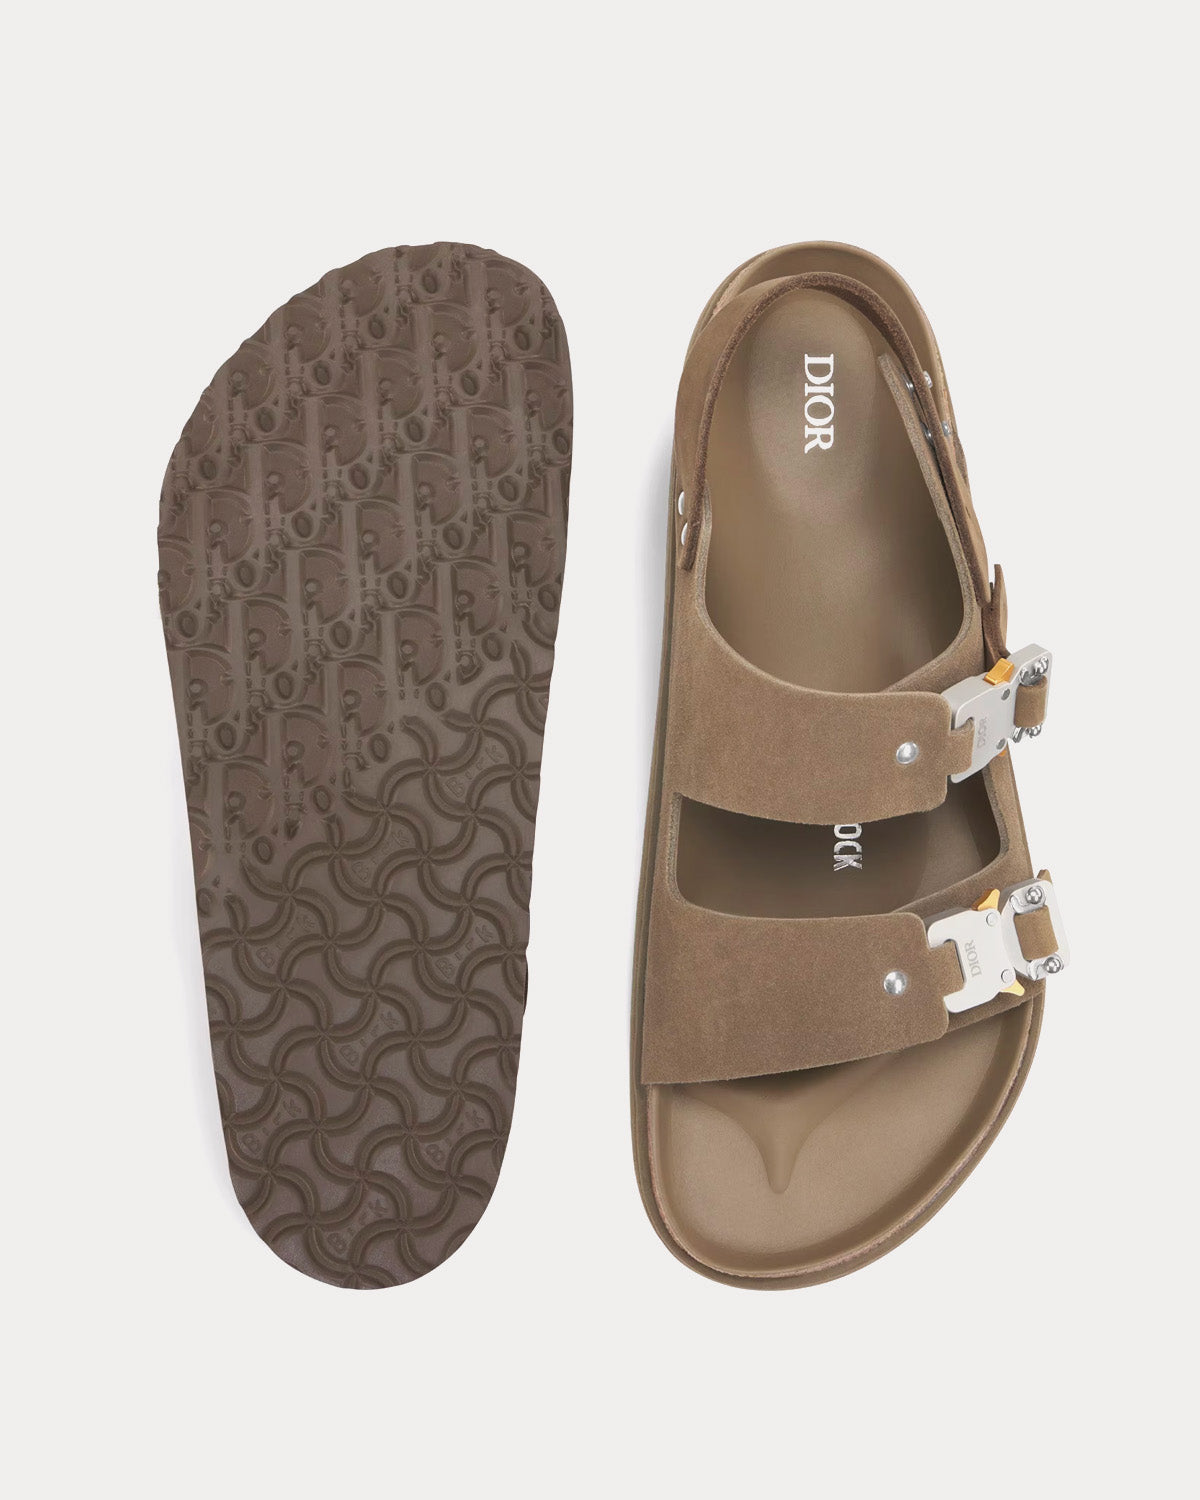 Dior x Birkenstock Milano Khaki Nubuck Calfskin Sandals - Sneak in 